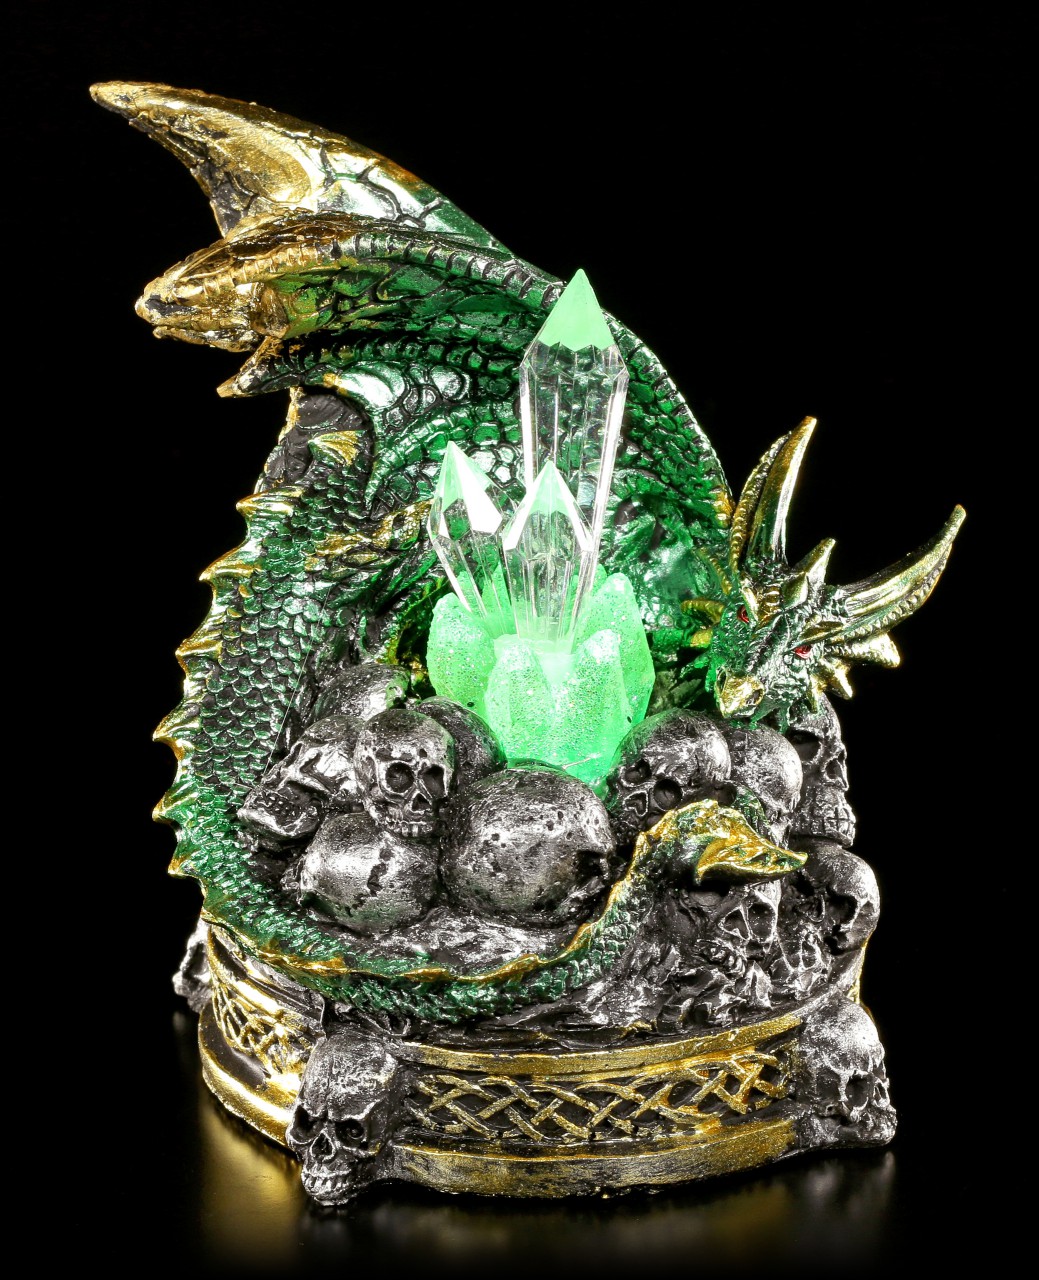 Dragon Figurine with LED Lighting - The Crystal Guardian - green